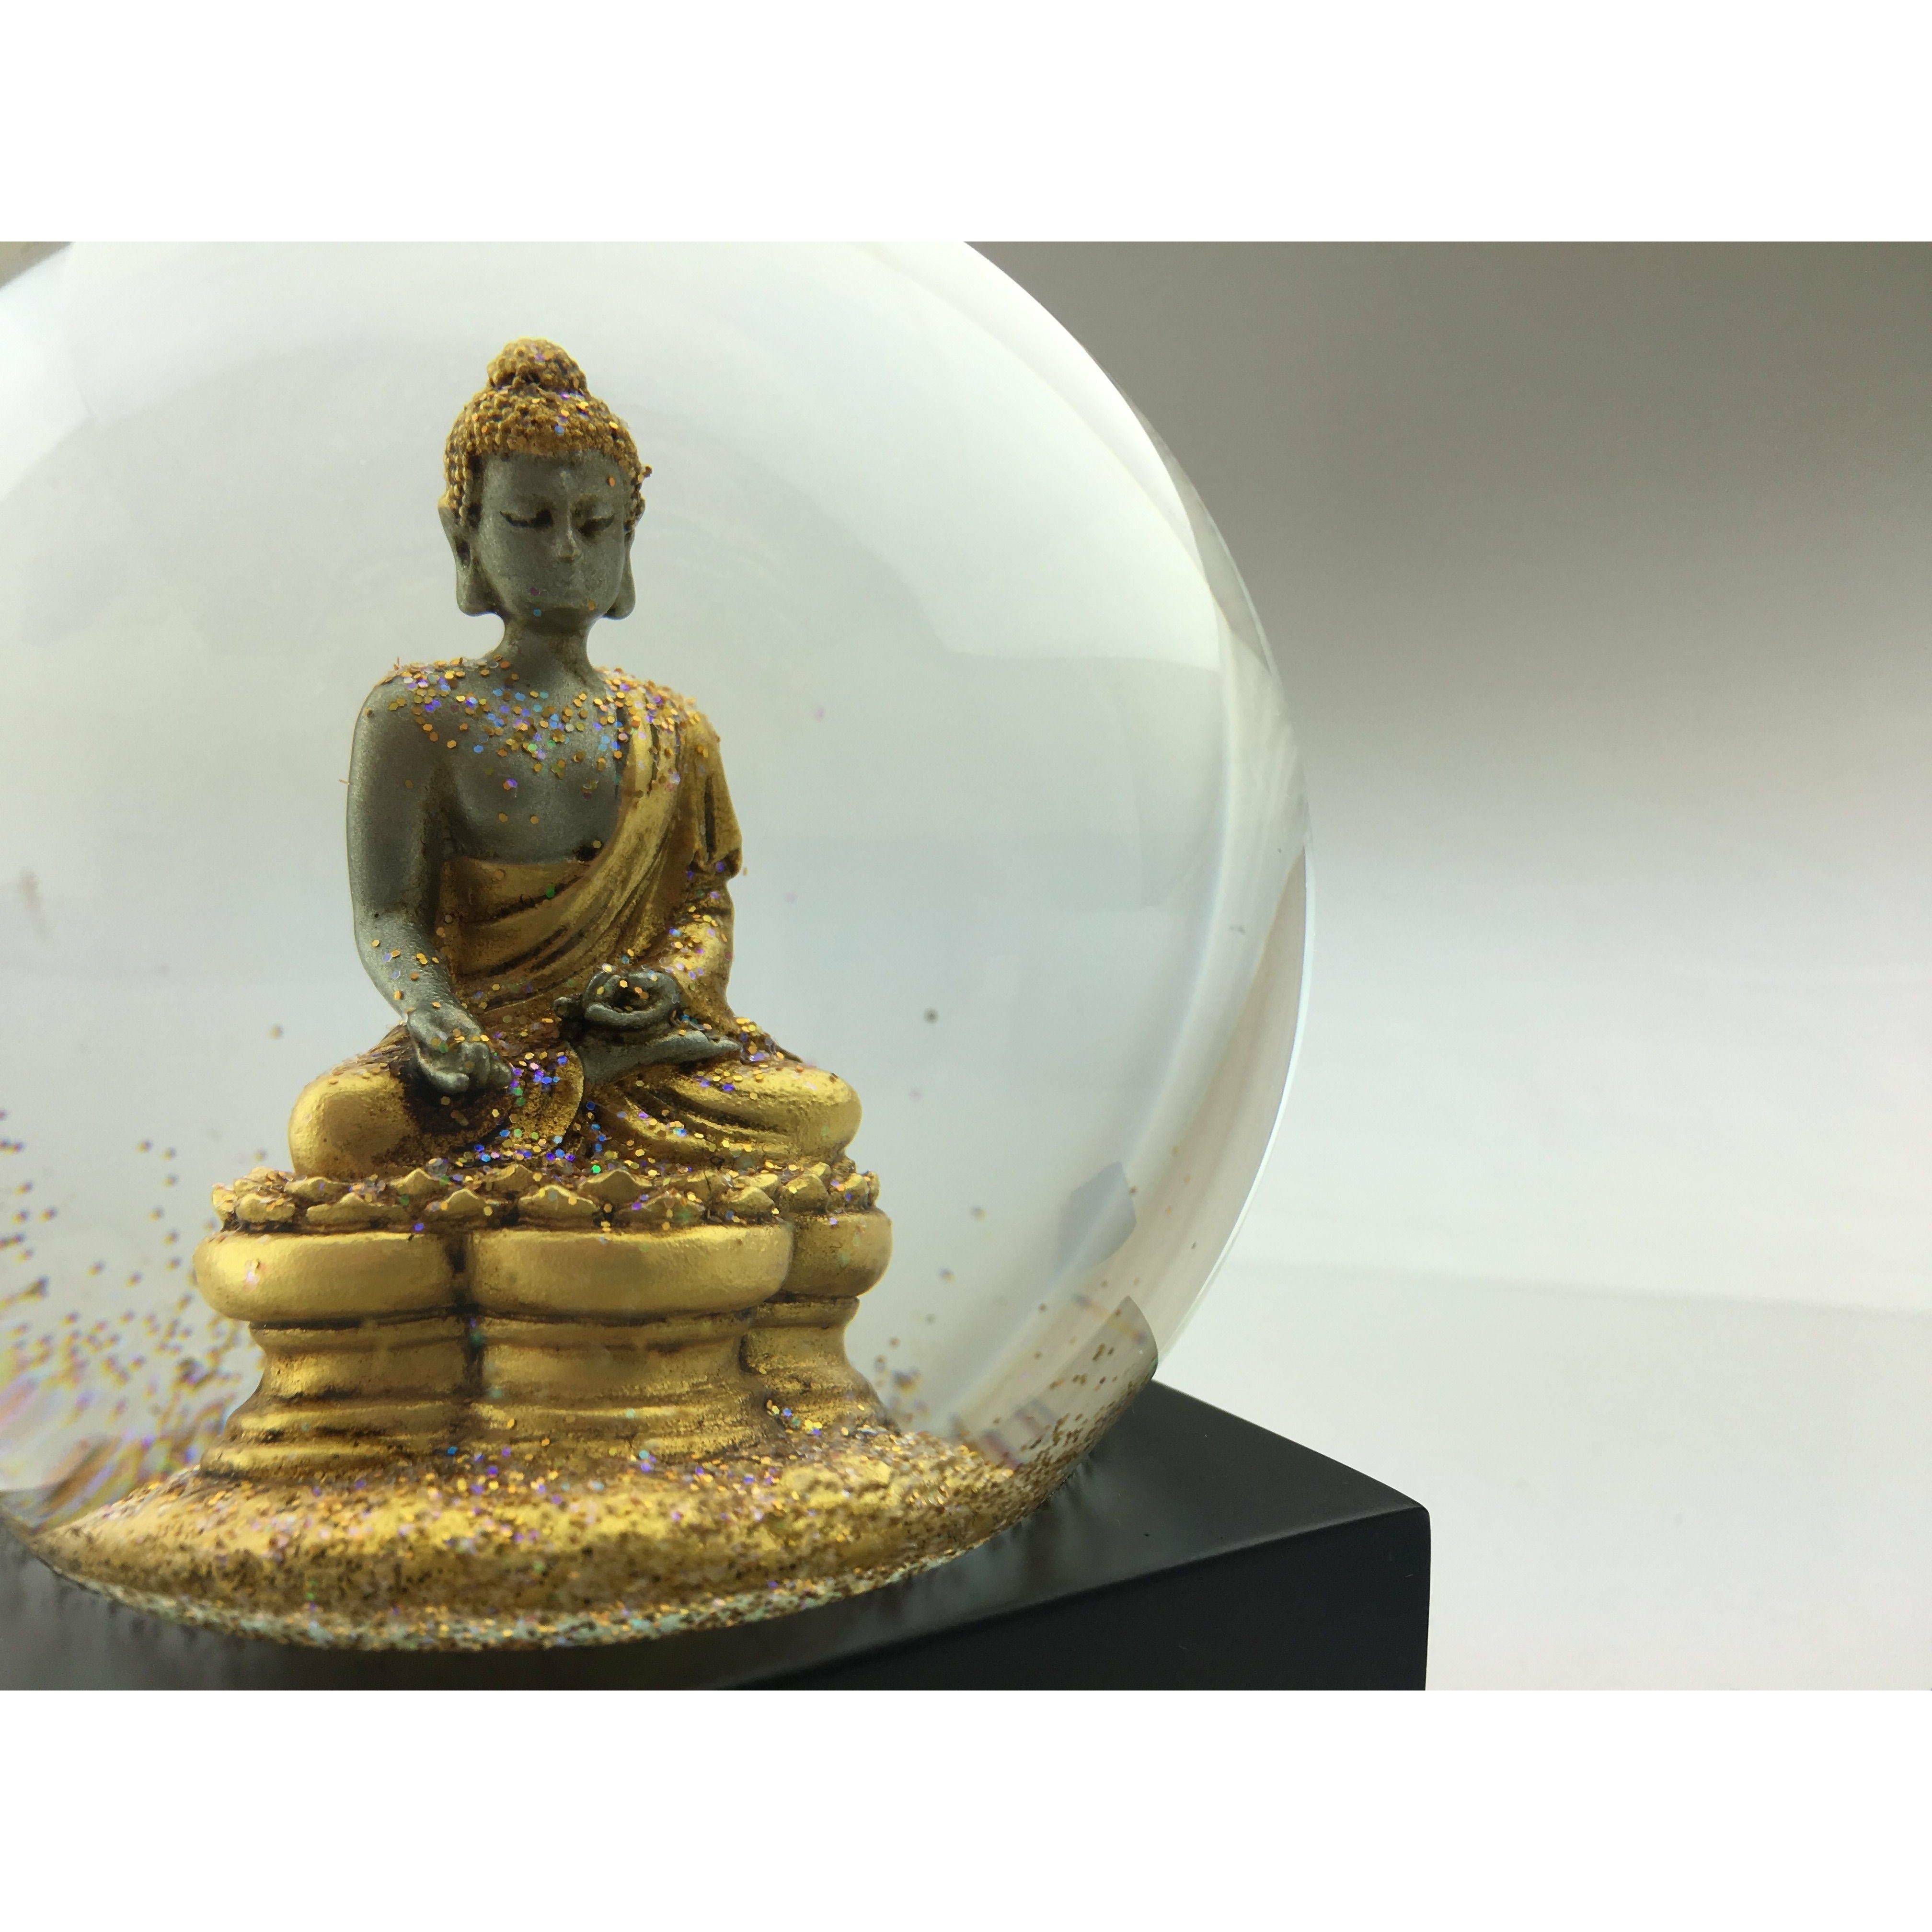 Cool Snow Globes Buddha Gold